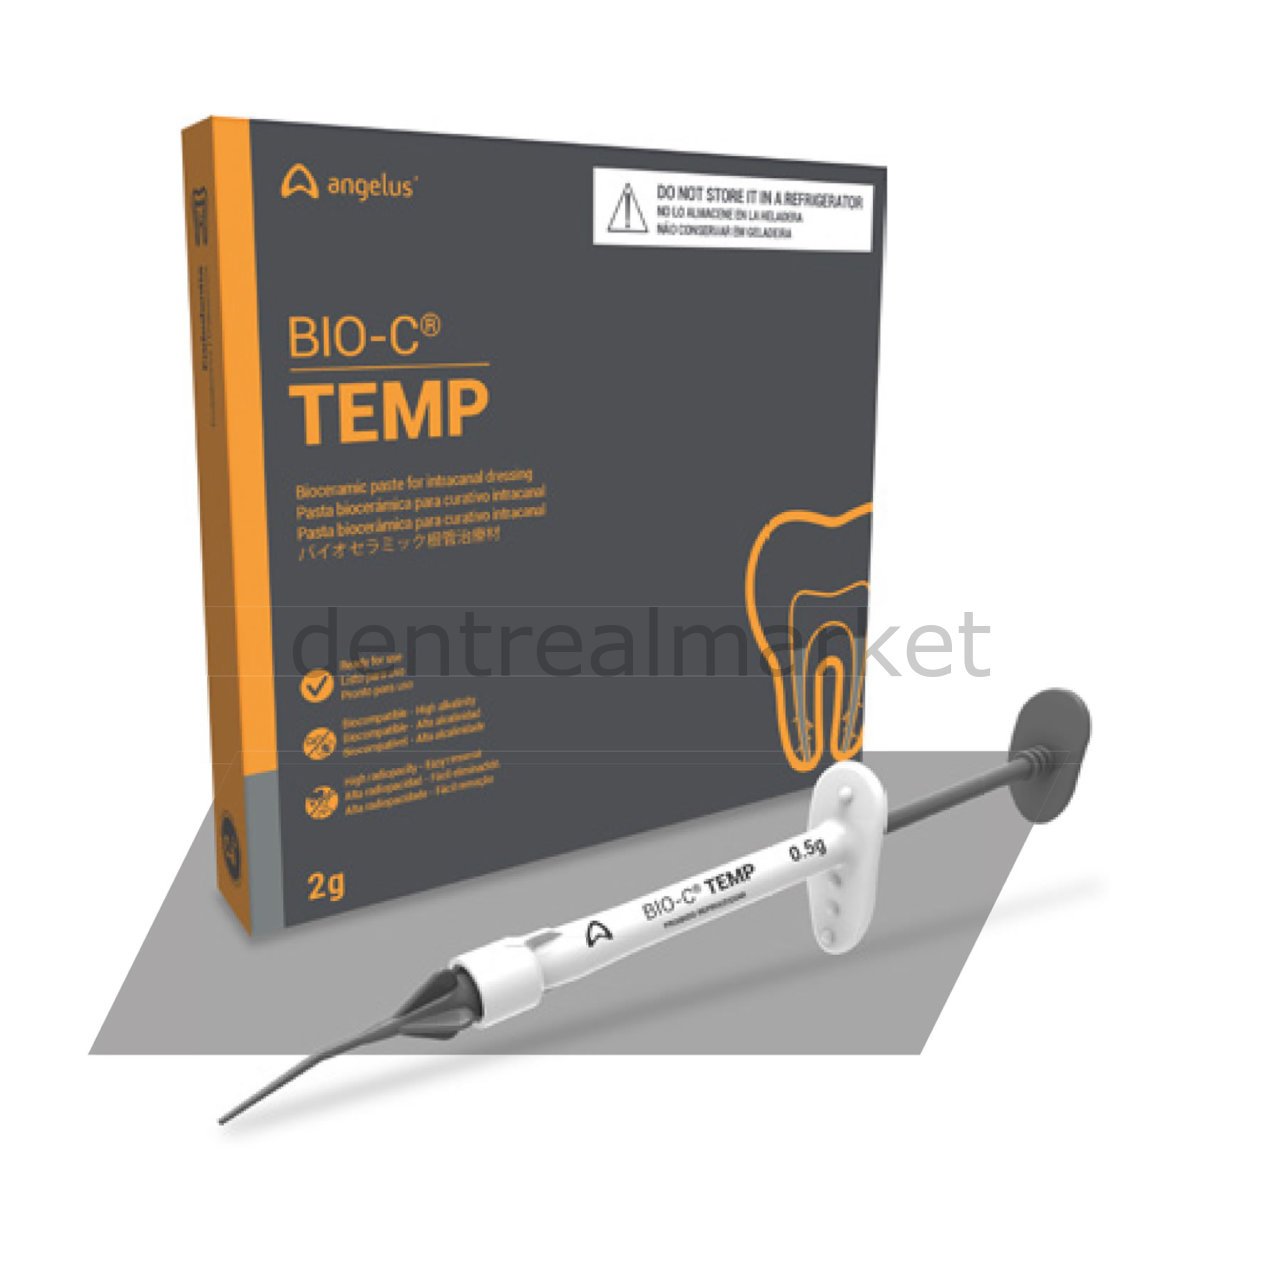 DentrealStore - Angelus BIO-C TEMP Temporary Root Canal Repair Paste - Bioceramic Paste